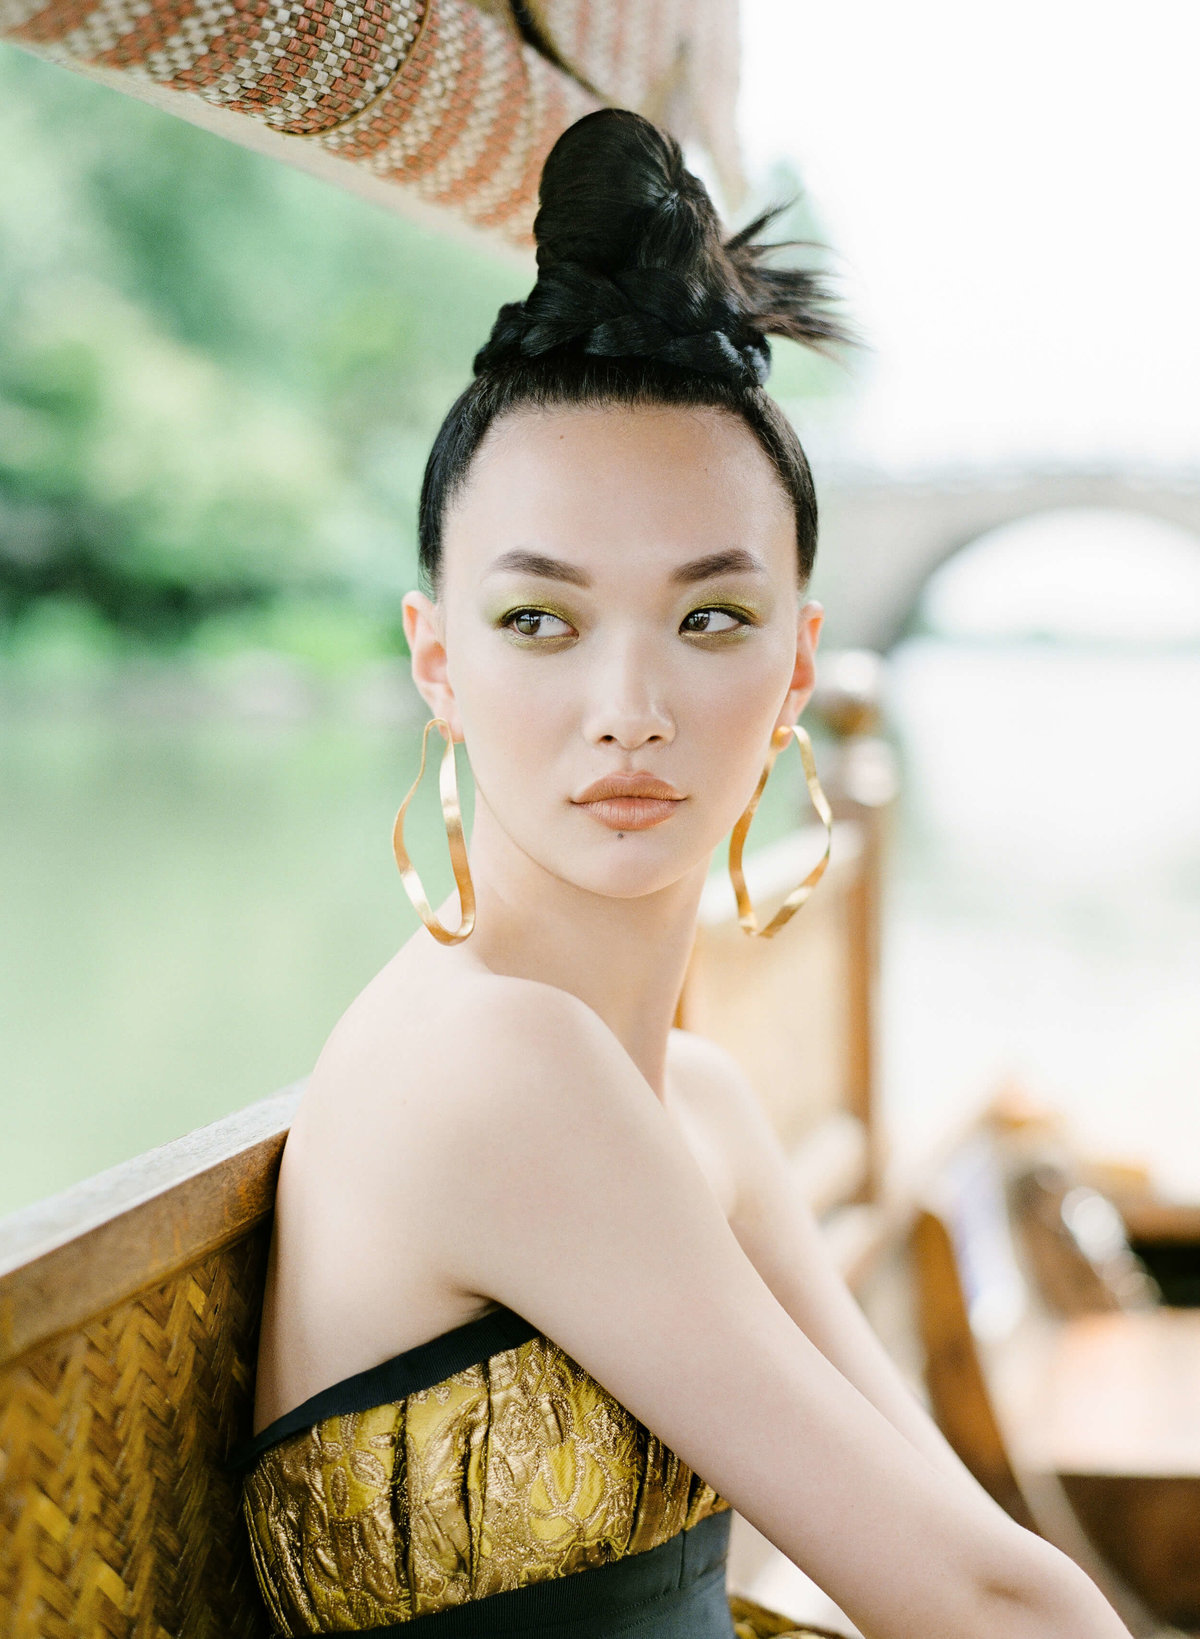 6-KTMerry-Harpers-Bazaar-Chinese-bride-hautecouture